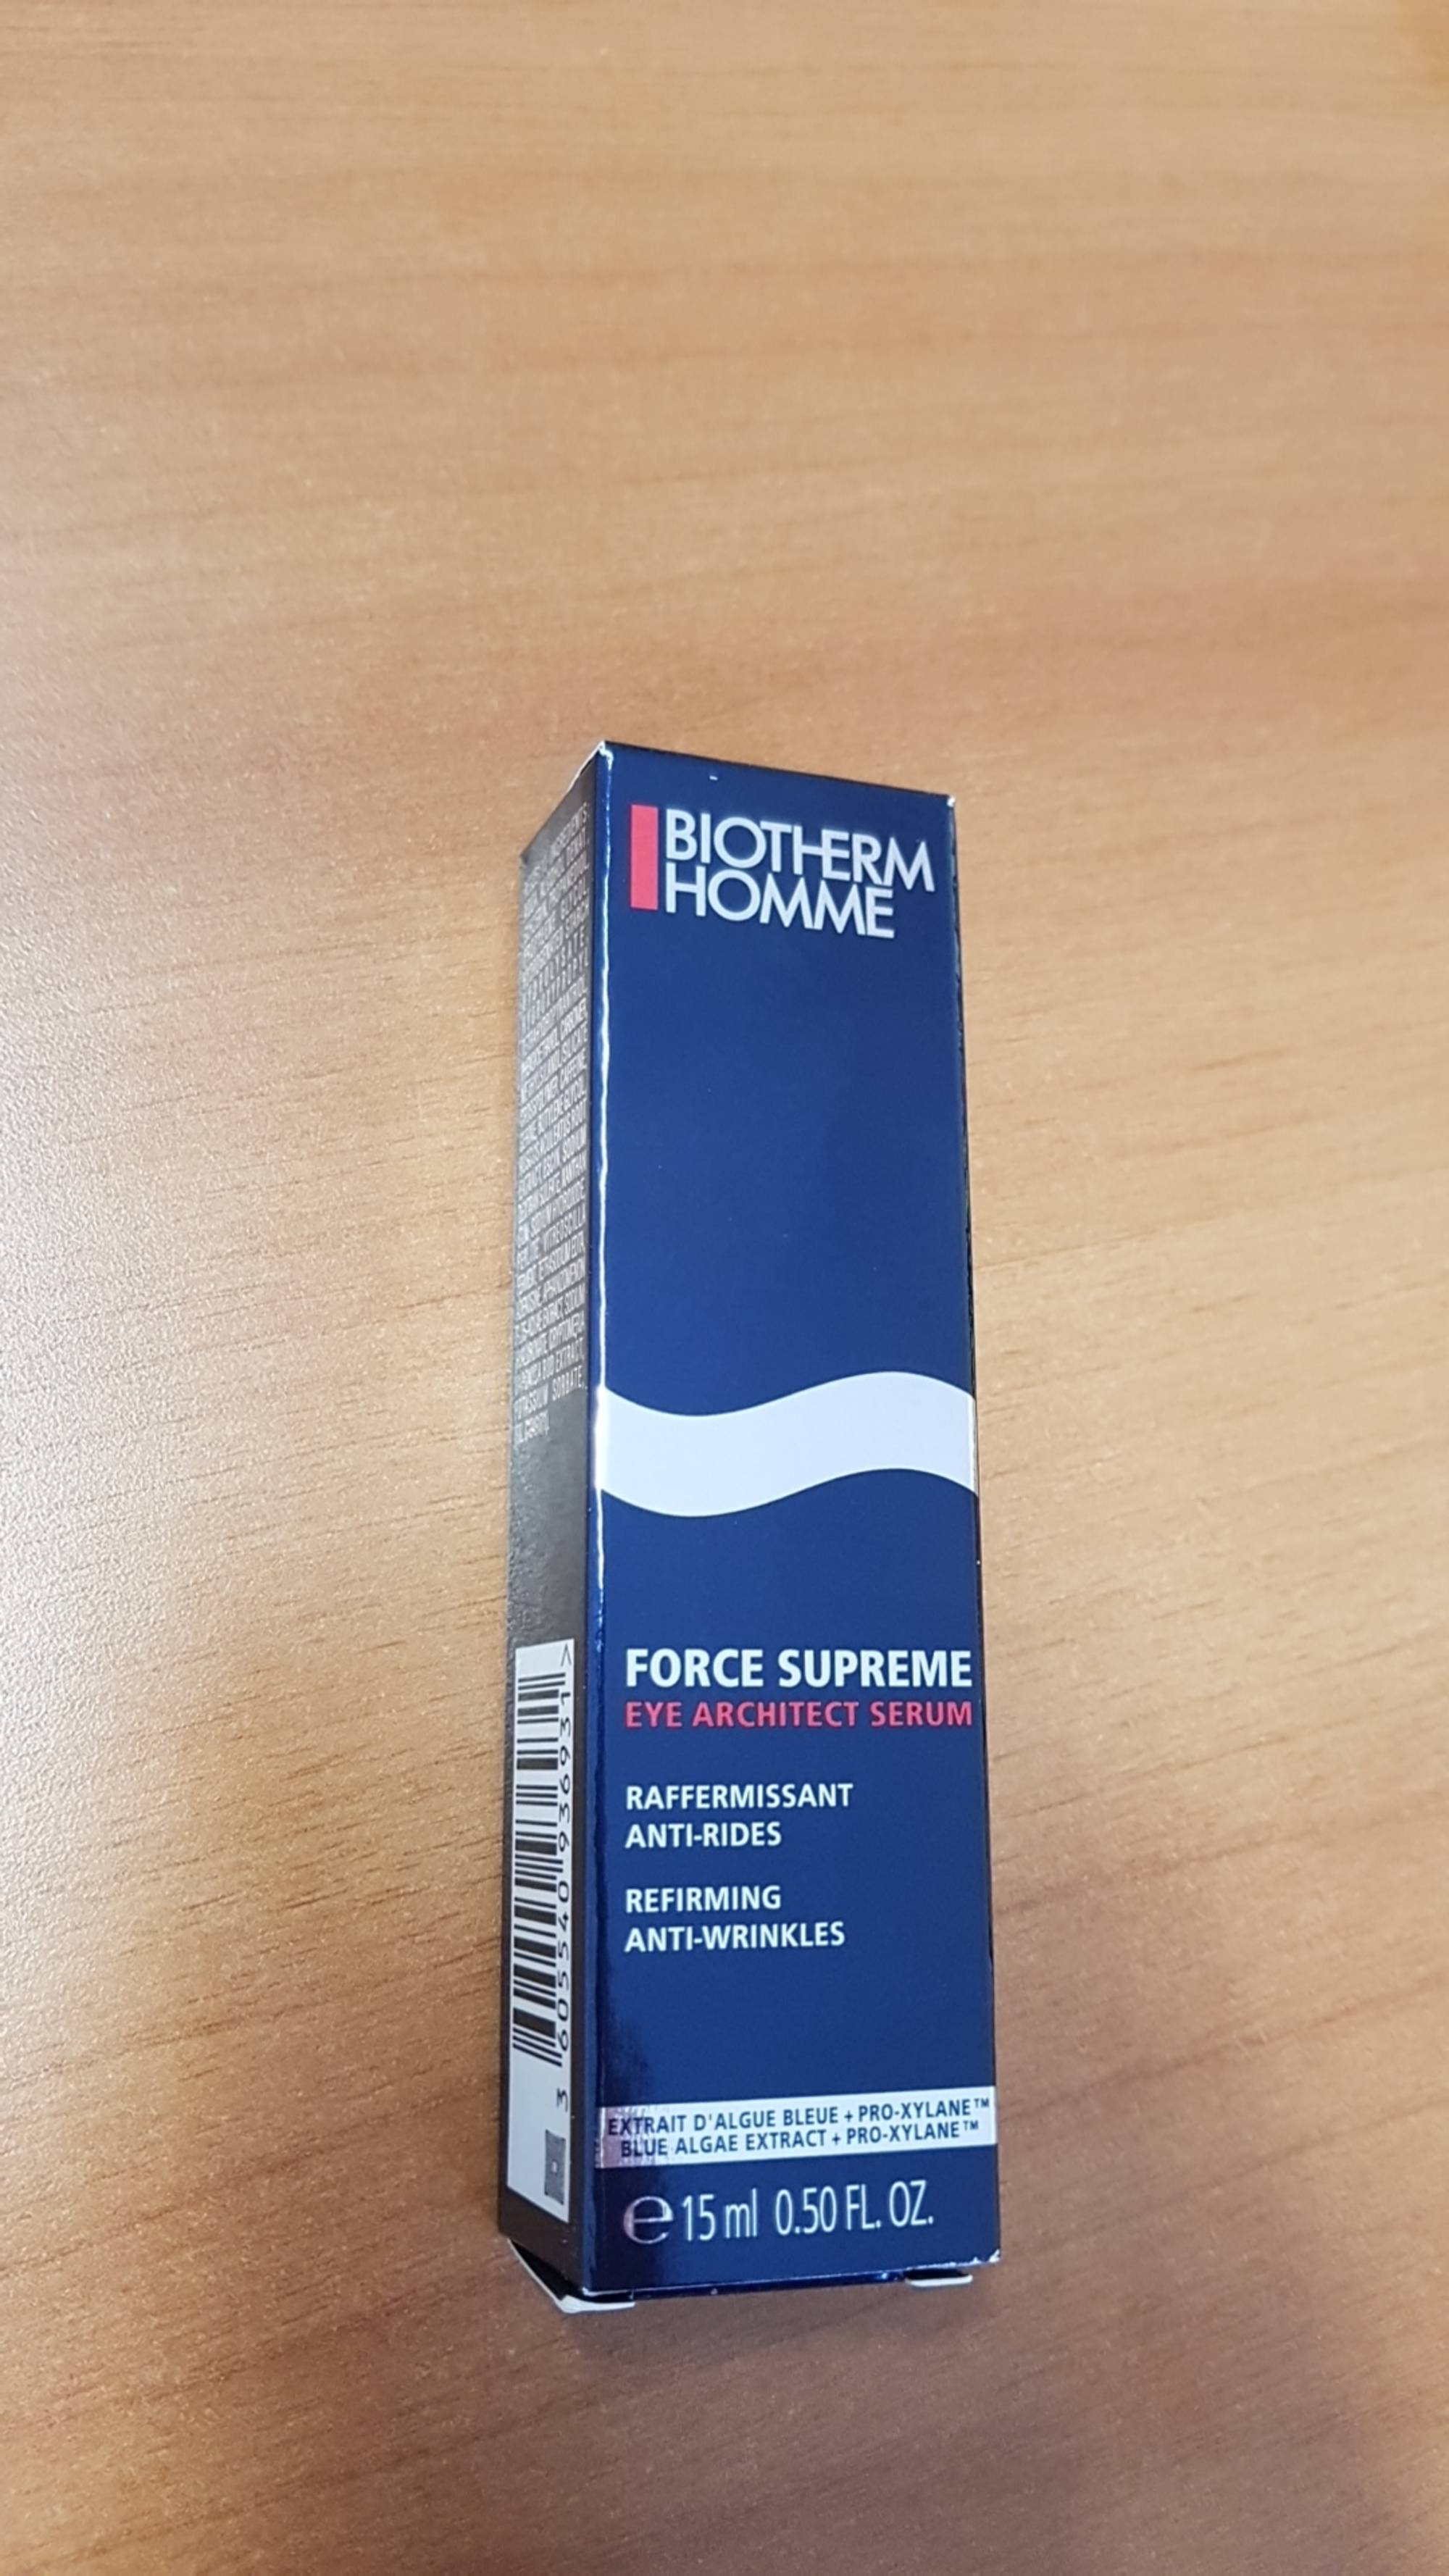 BIOTHERM - Homme Force suprême - Eye architec sérum